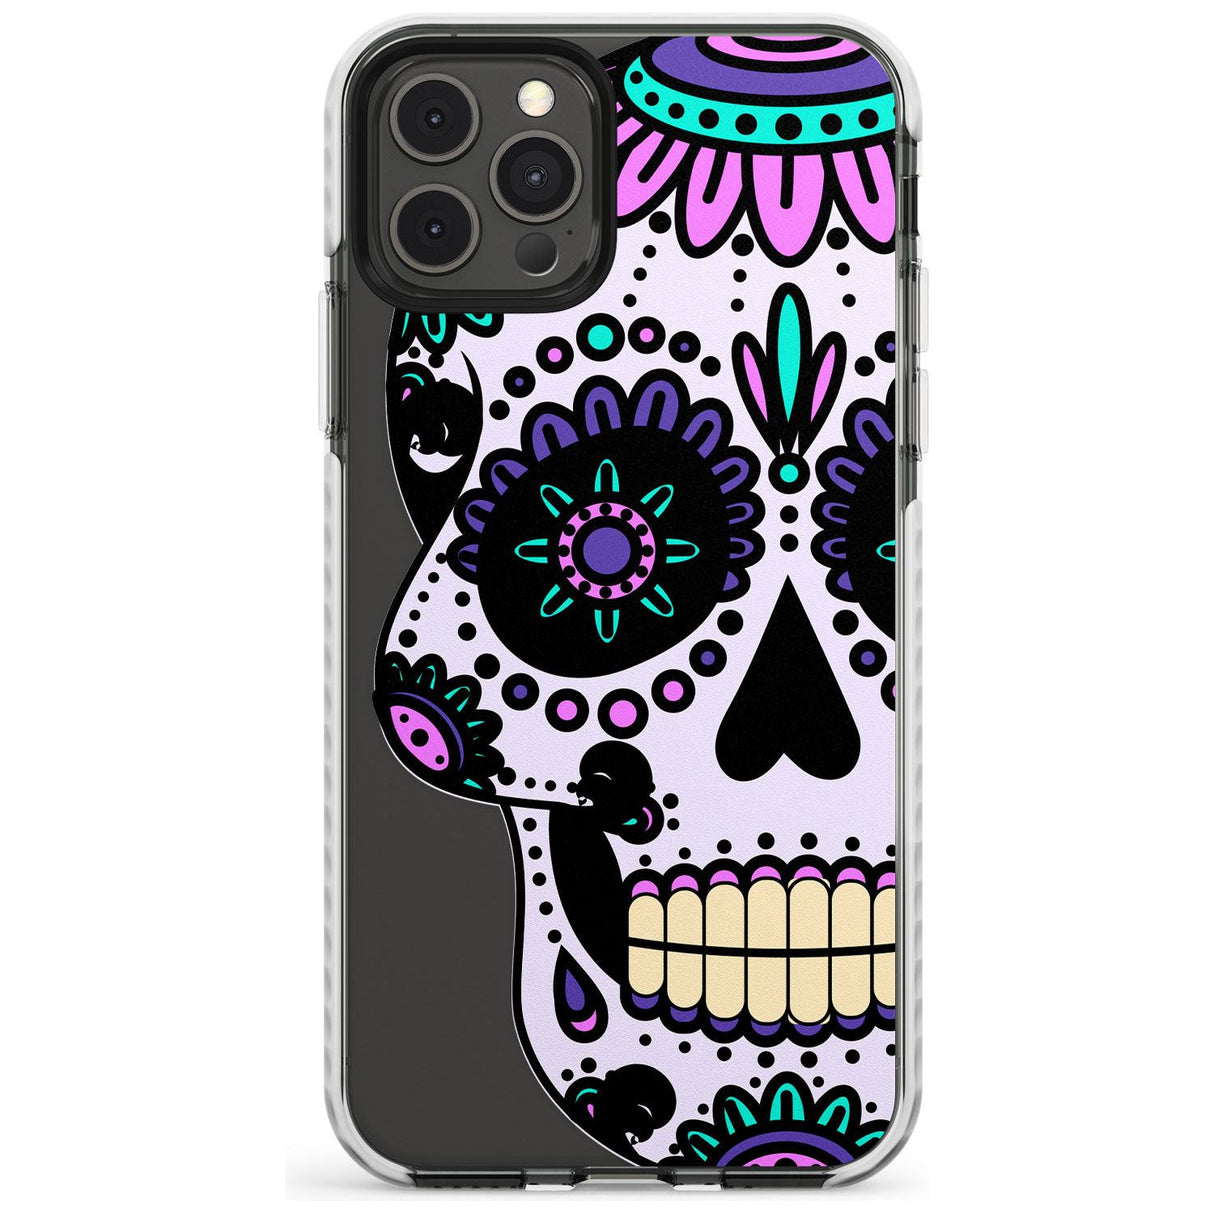 Violet Sugar Skull Impact Phone Case for iPhone 11 Pro Max